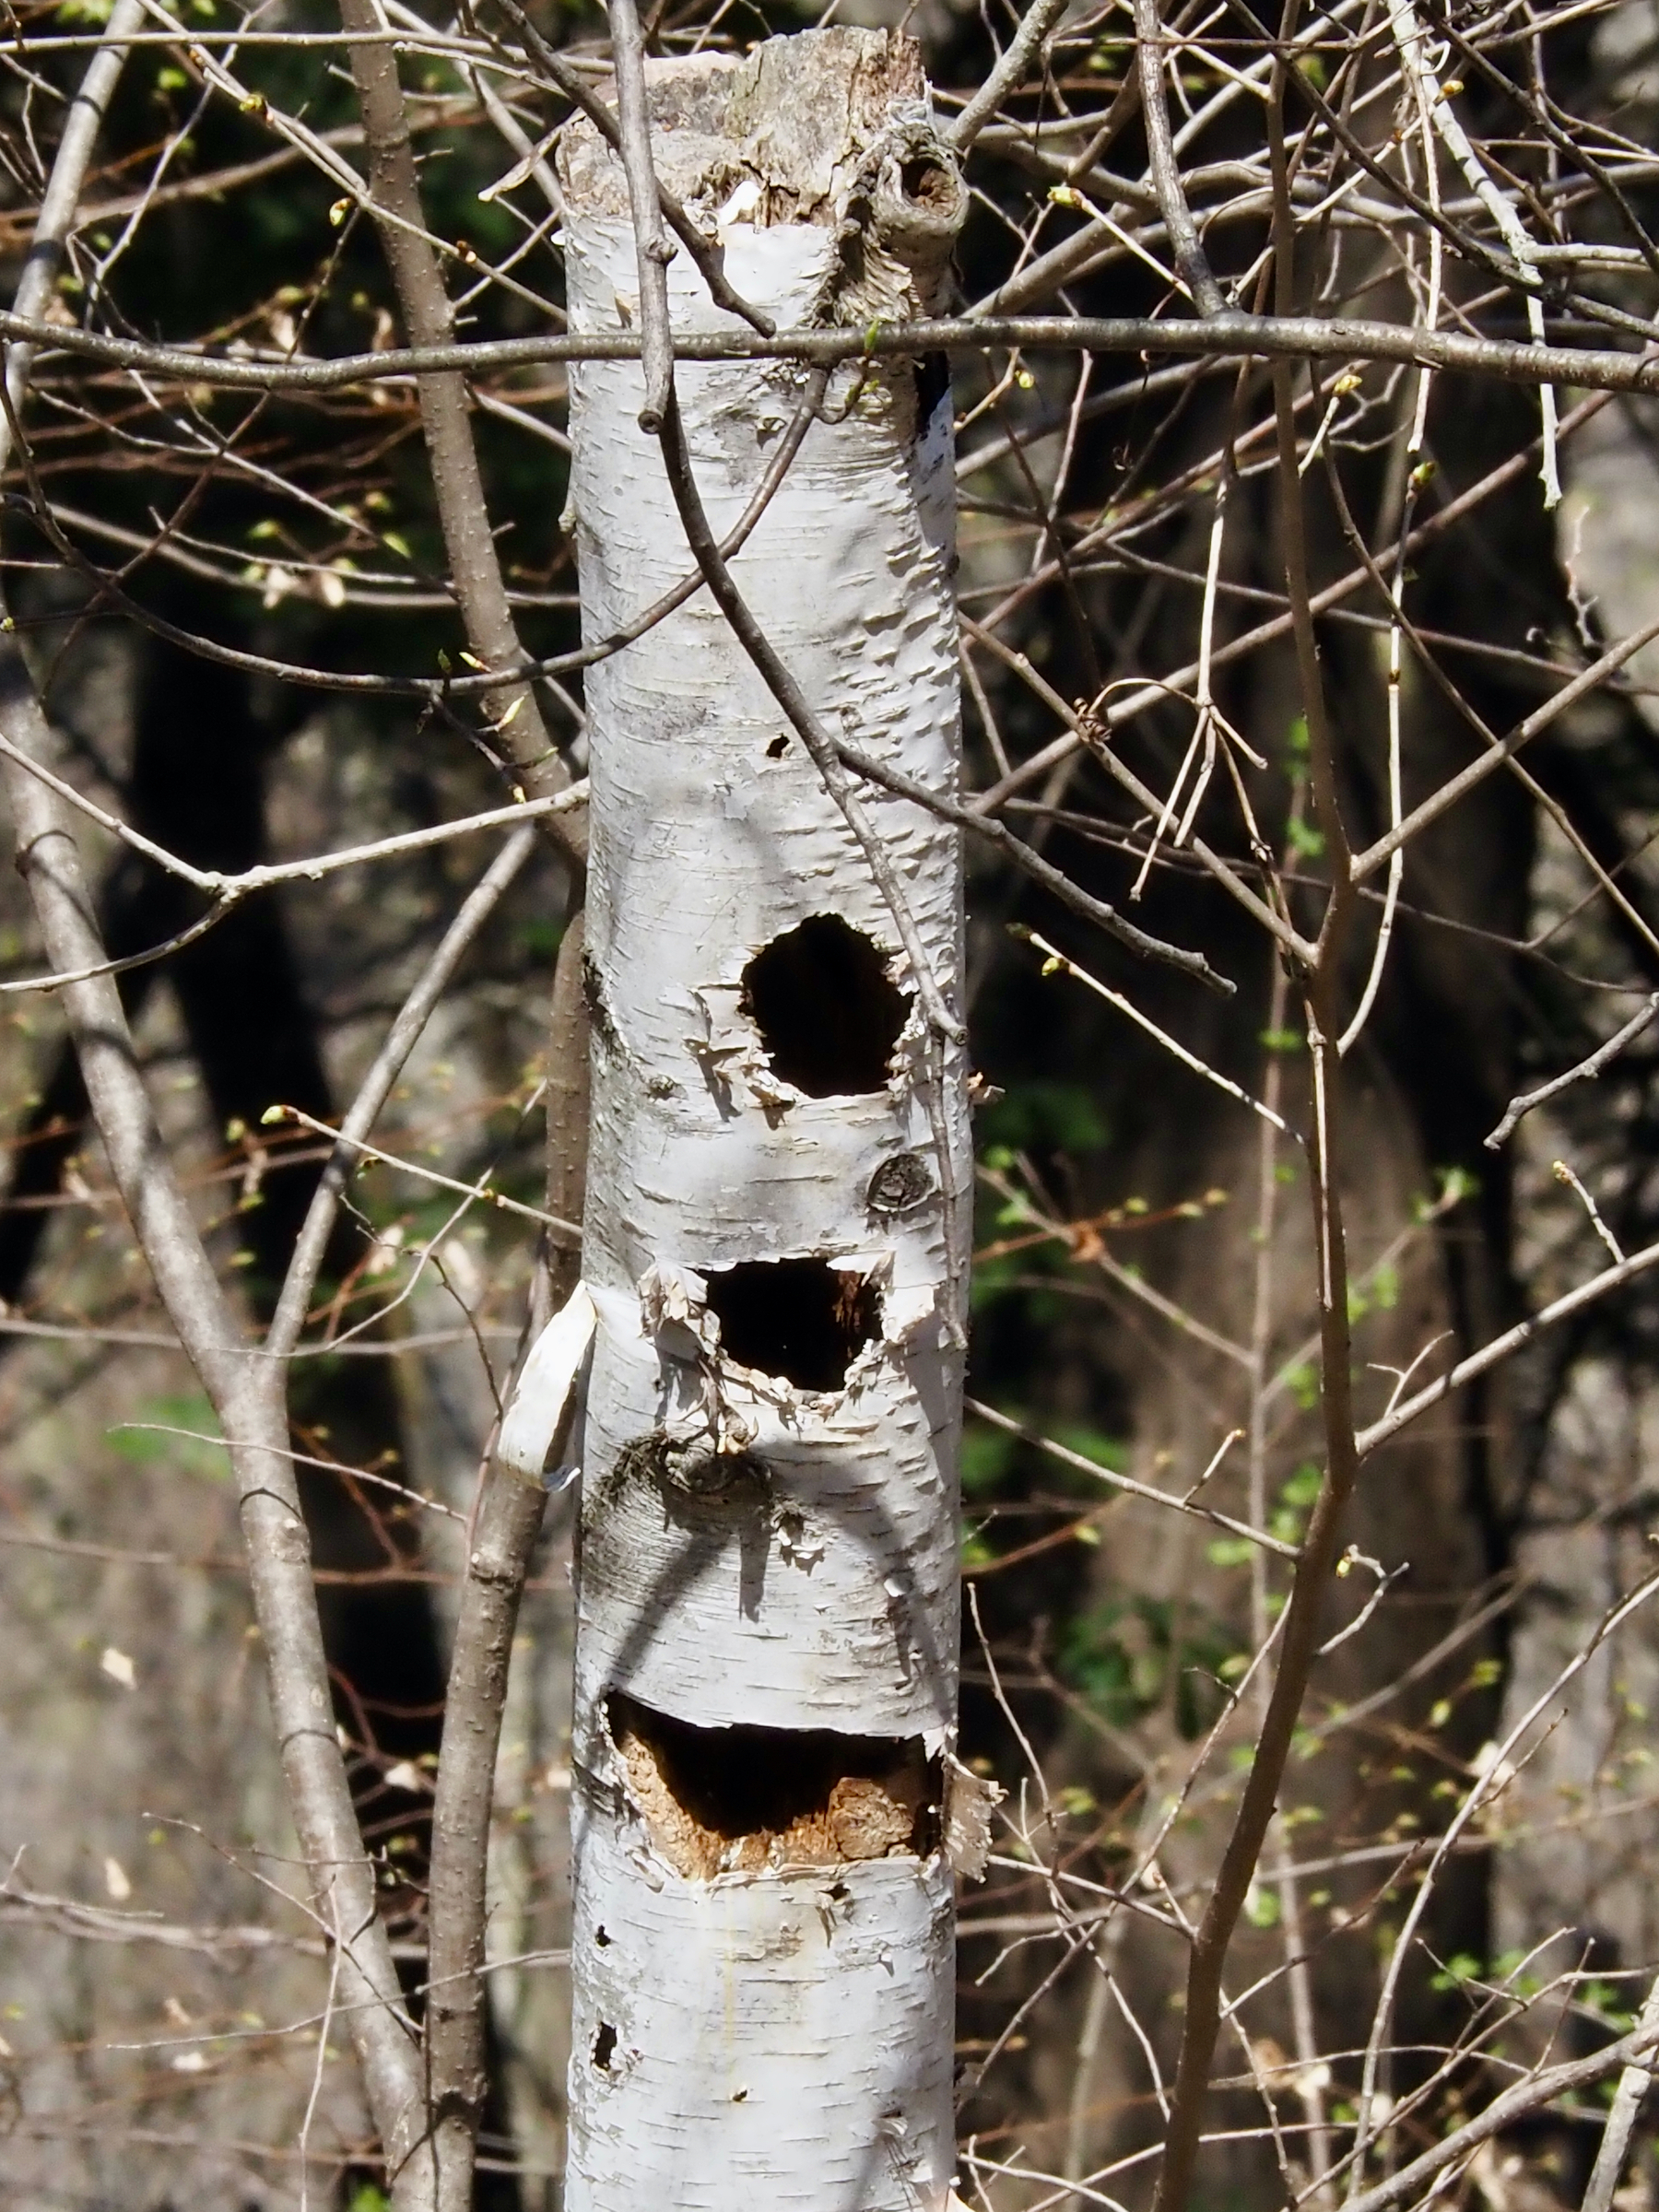 A birch tree stump with 3 woodpecker holes